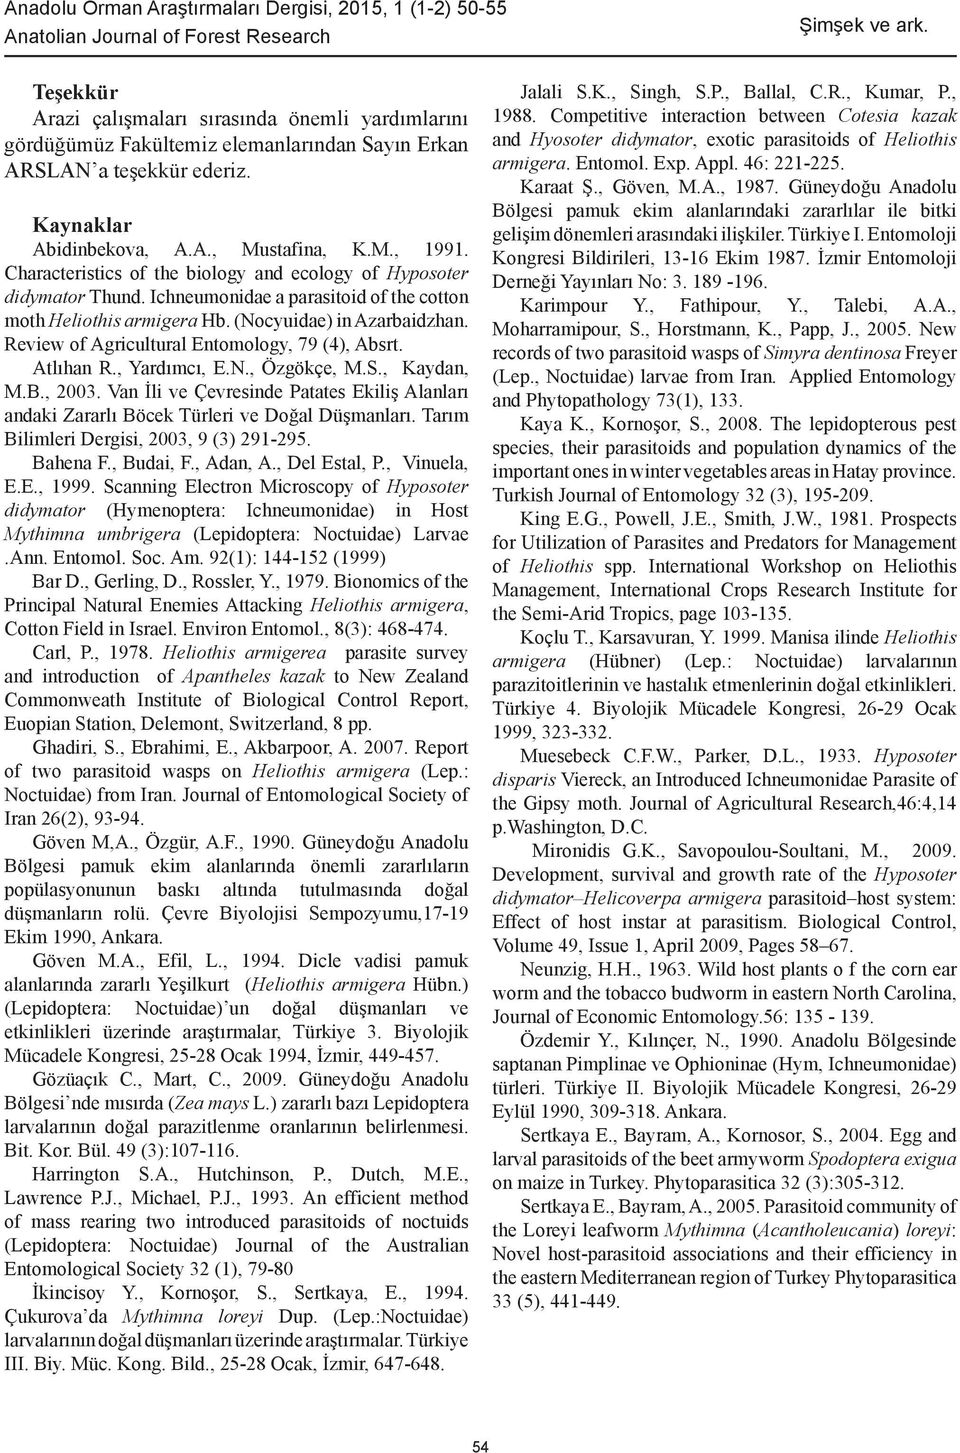 Review of Agricultural Entomology, 79 (4), Absrt. Atlıhan R., Yardımcı, E.N., Özgökçe, M.S., Kaydan, M.B., 2003.